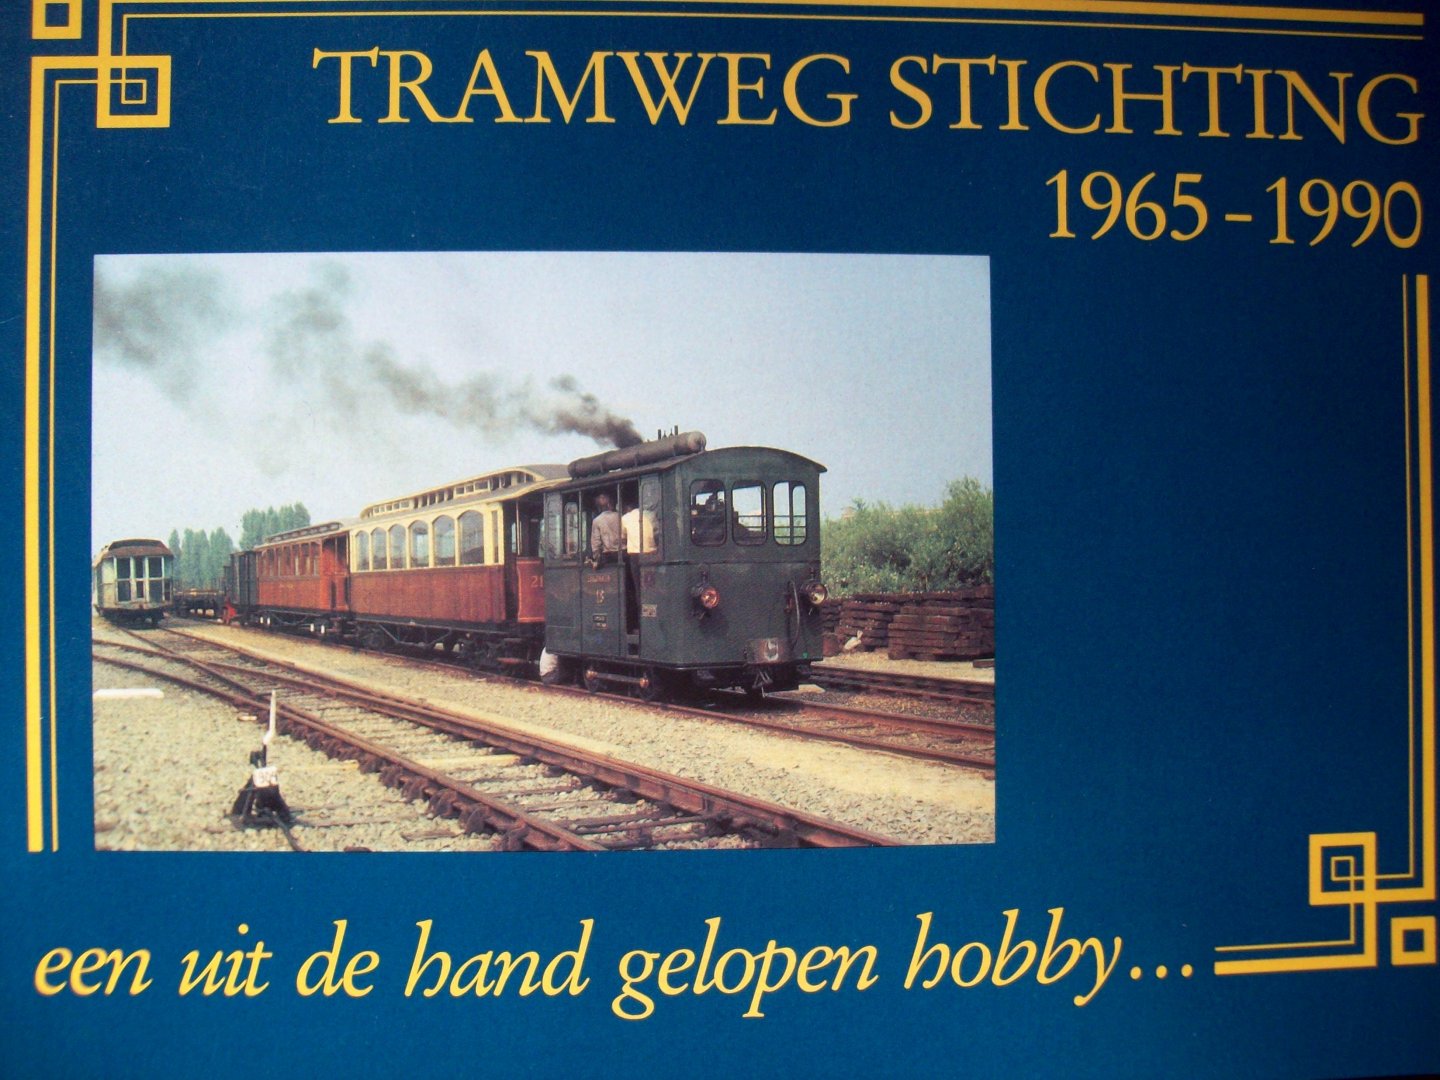 W.R. Beukenkamp e.a. - "Tramwegstichting 1965 - 1990" Een uit de hand gelopen hobby...